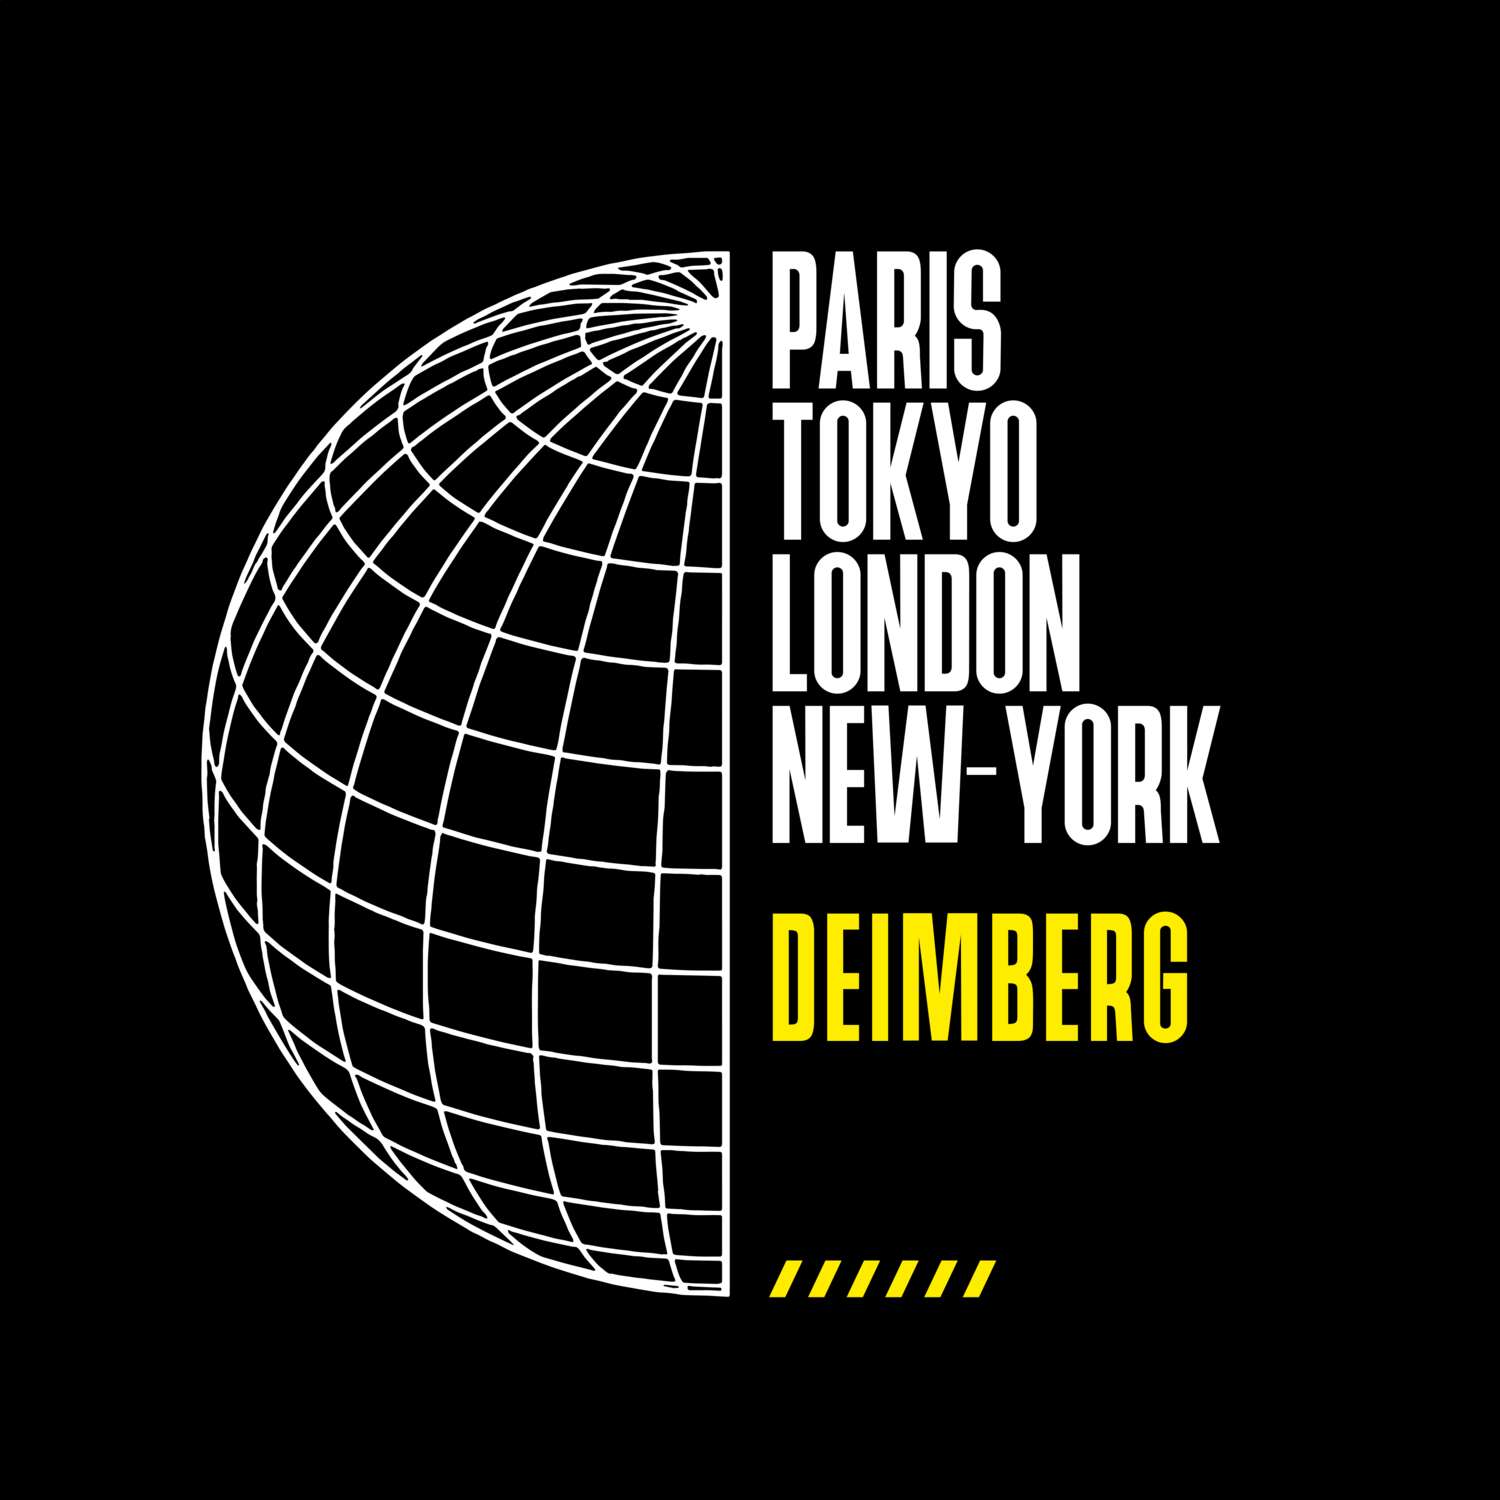 Deimberg T-Shirt »Paris Tokyo London«